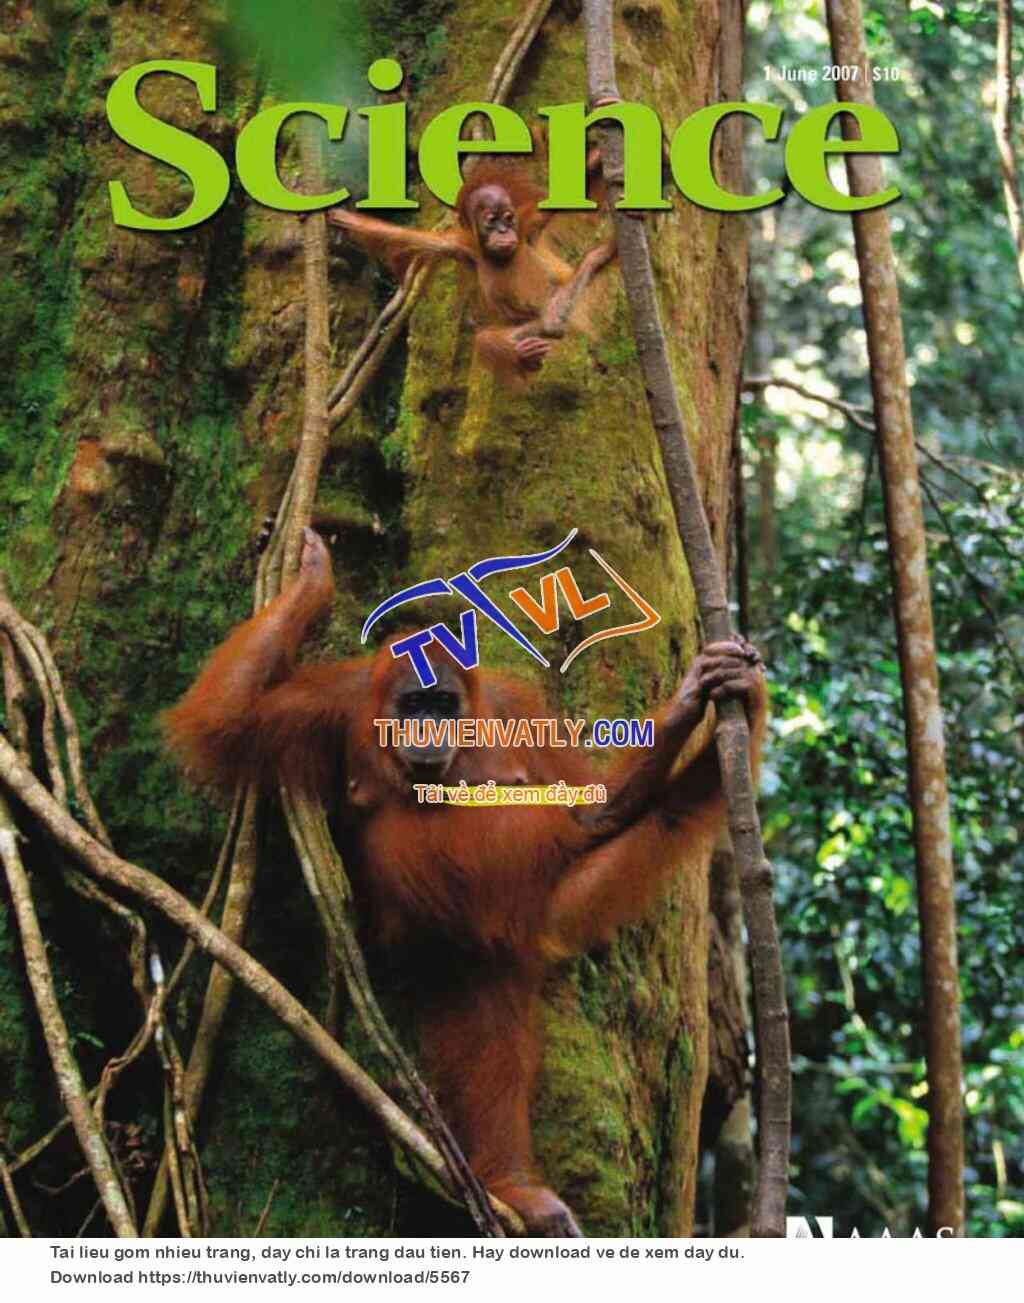 Science Magazine_2007-06-01